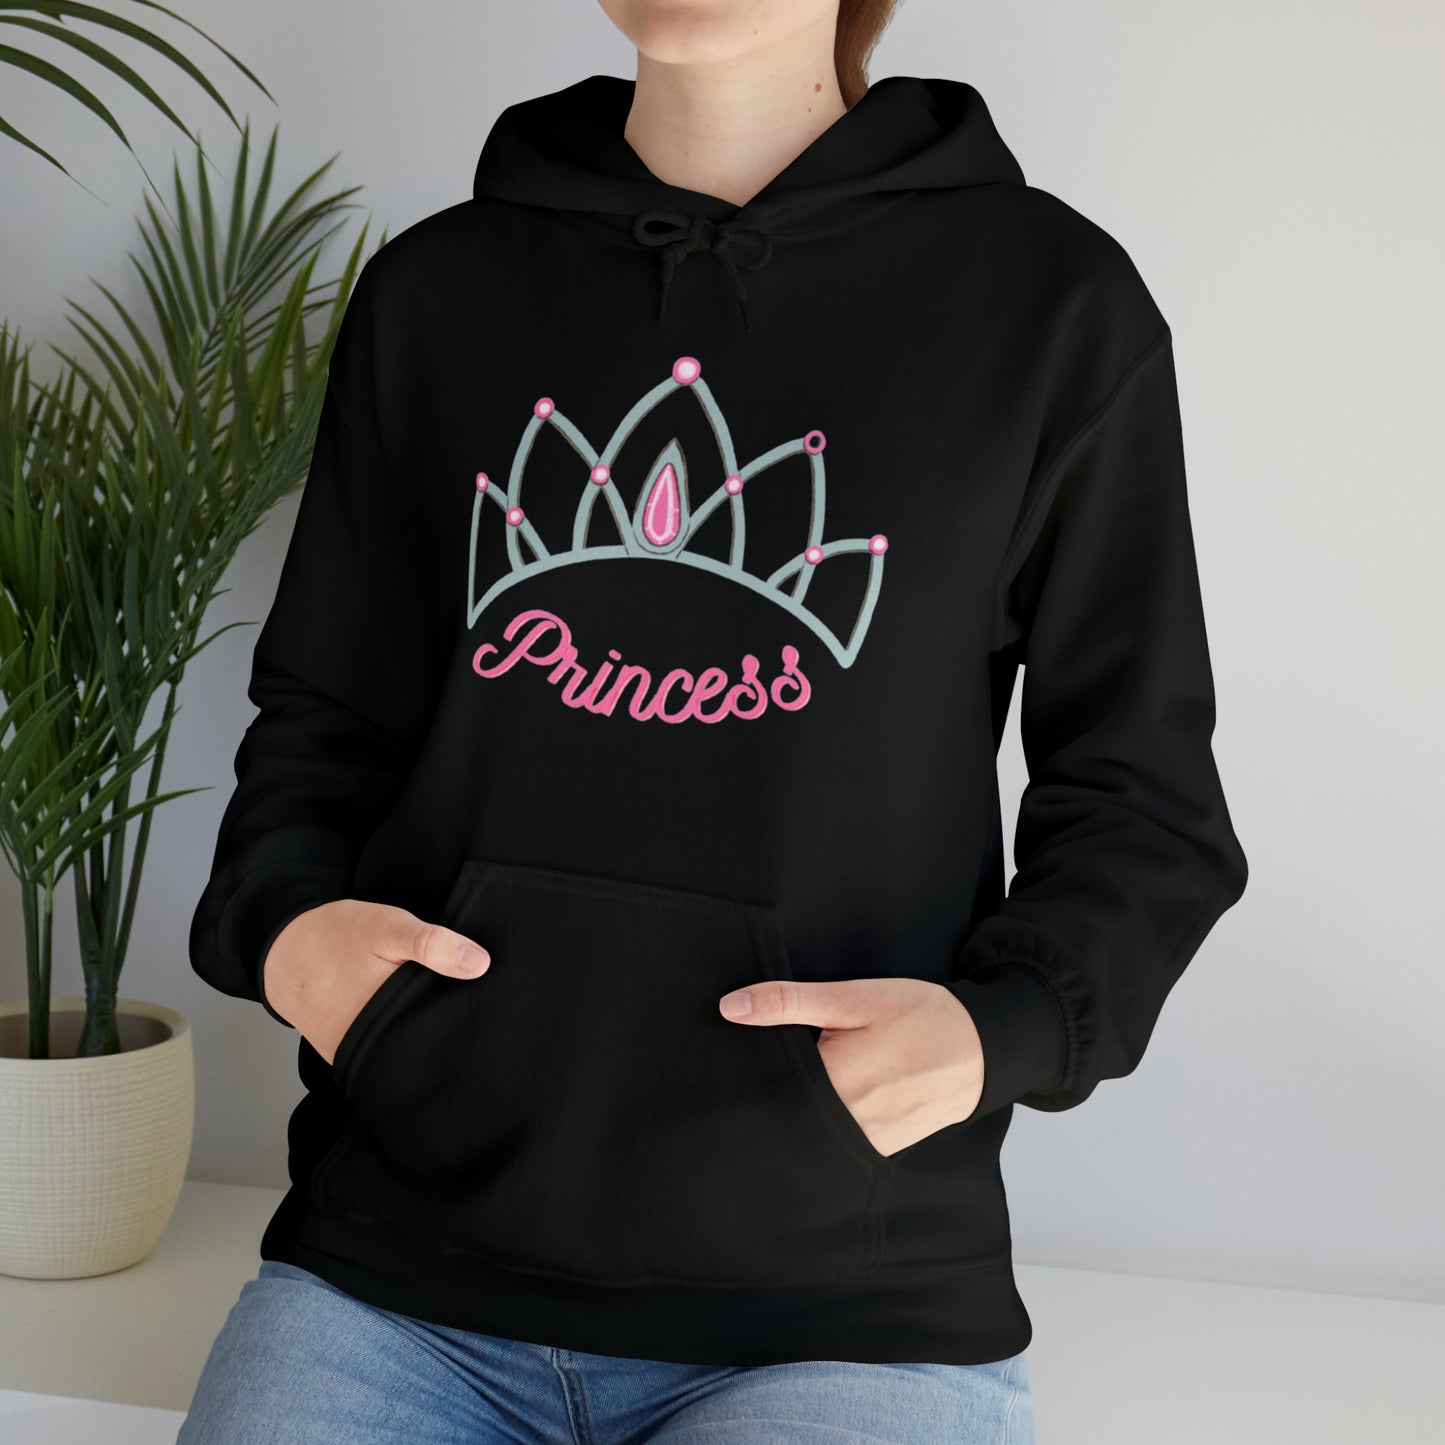 Princess Unisex Hooded Sweatshirt